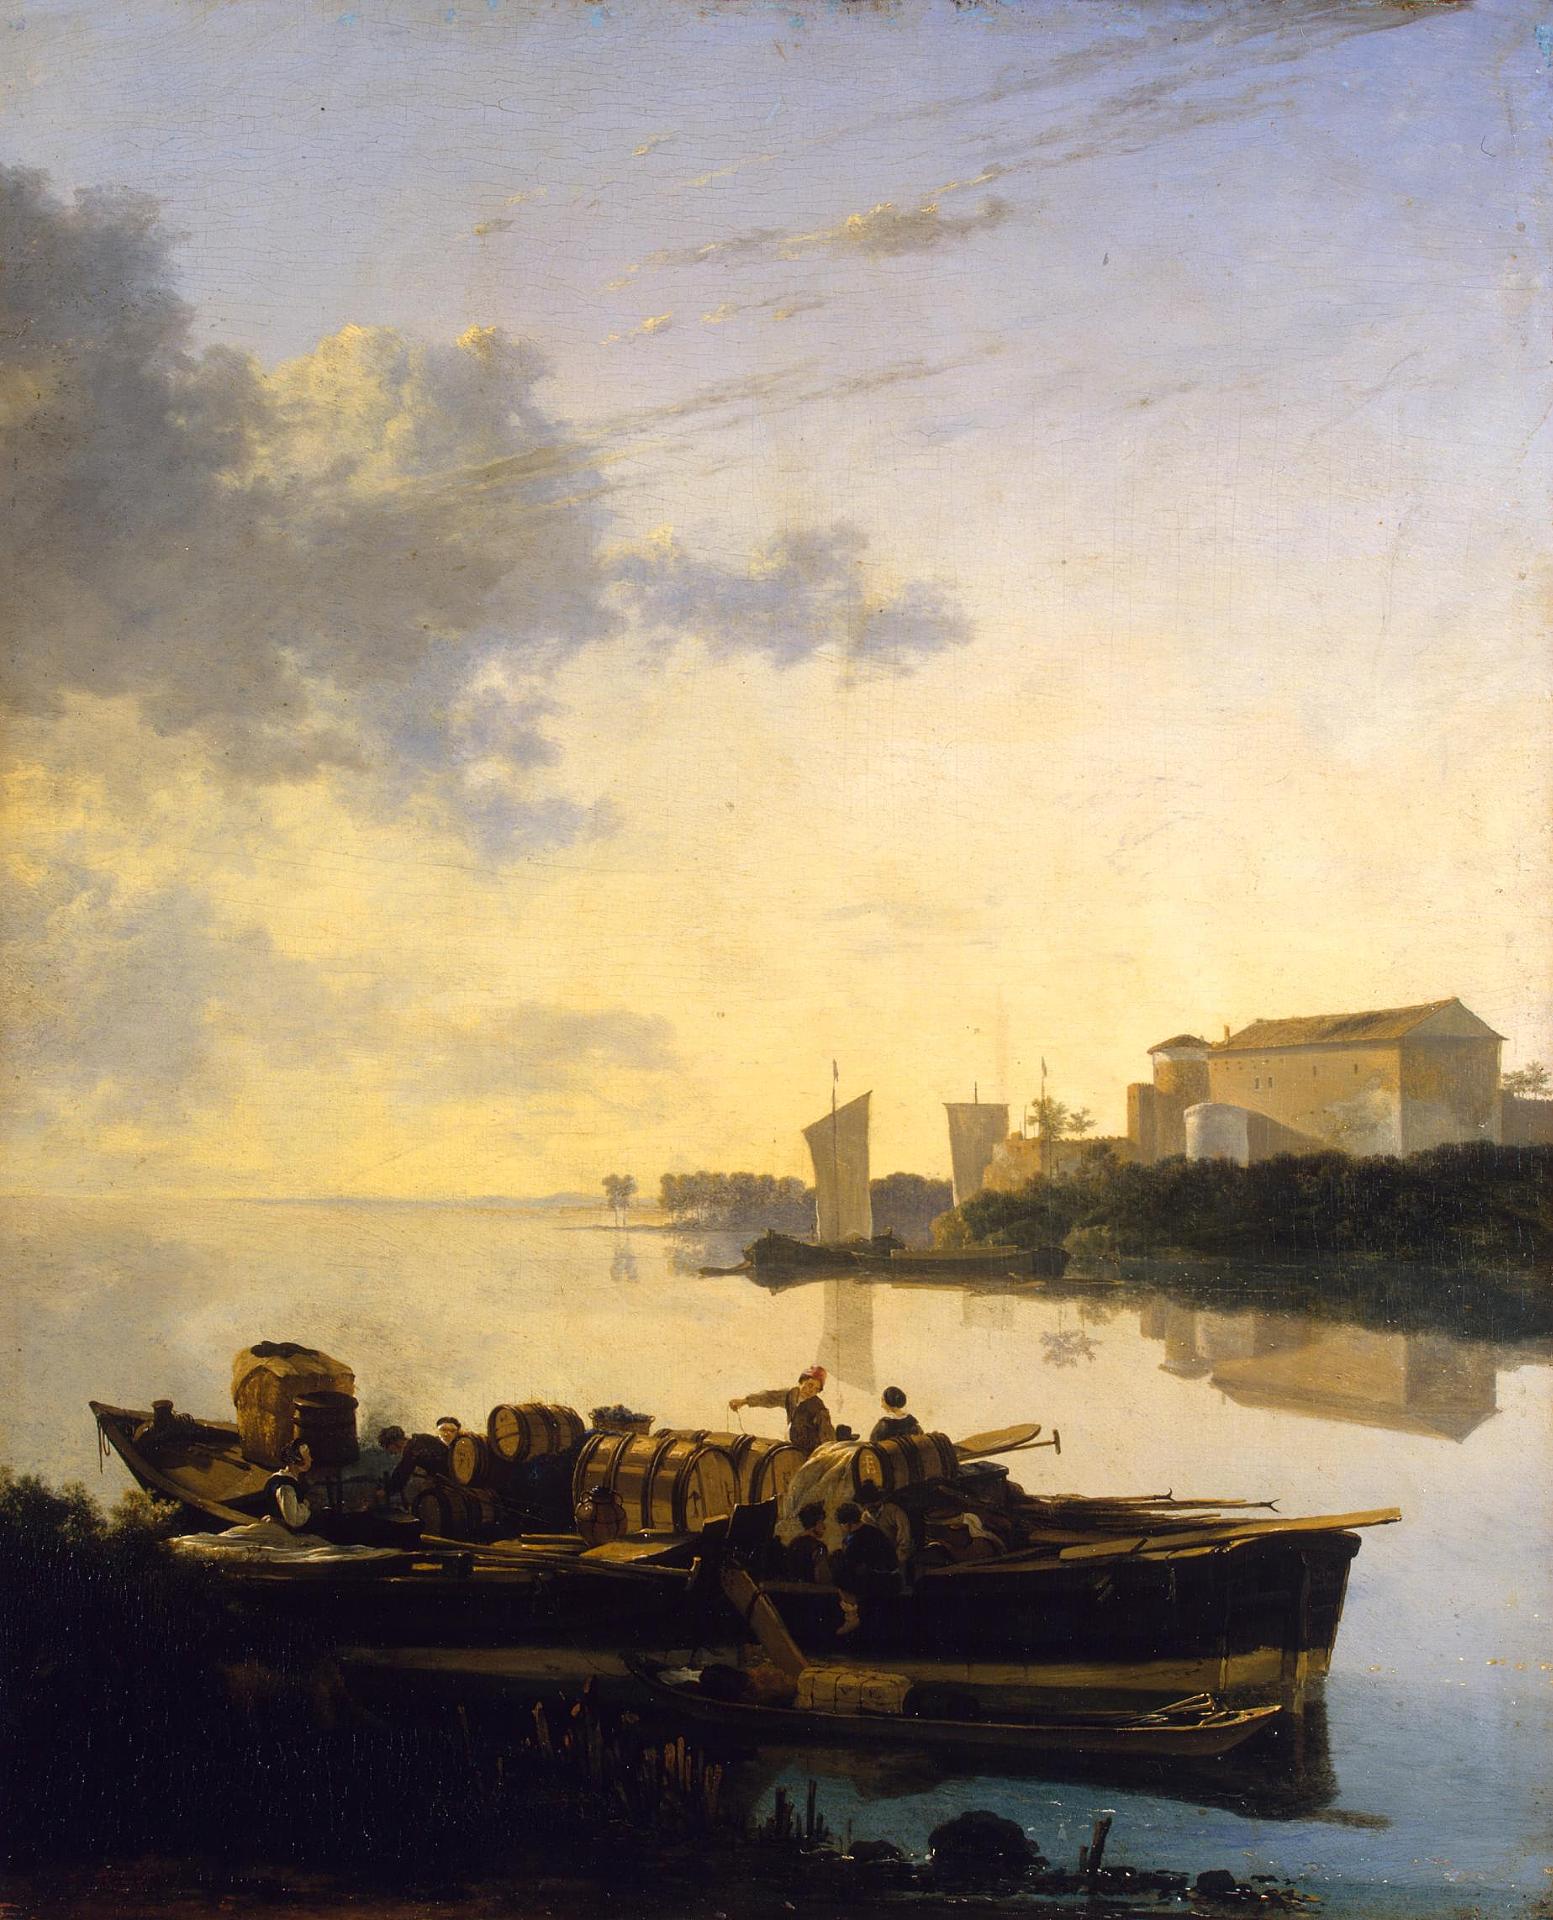 Адам Пейнакер. "Барка на реке при закате солнца". Около 1654. Эрмитаж, Санкт-Петербург.